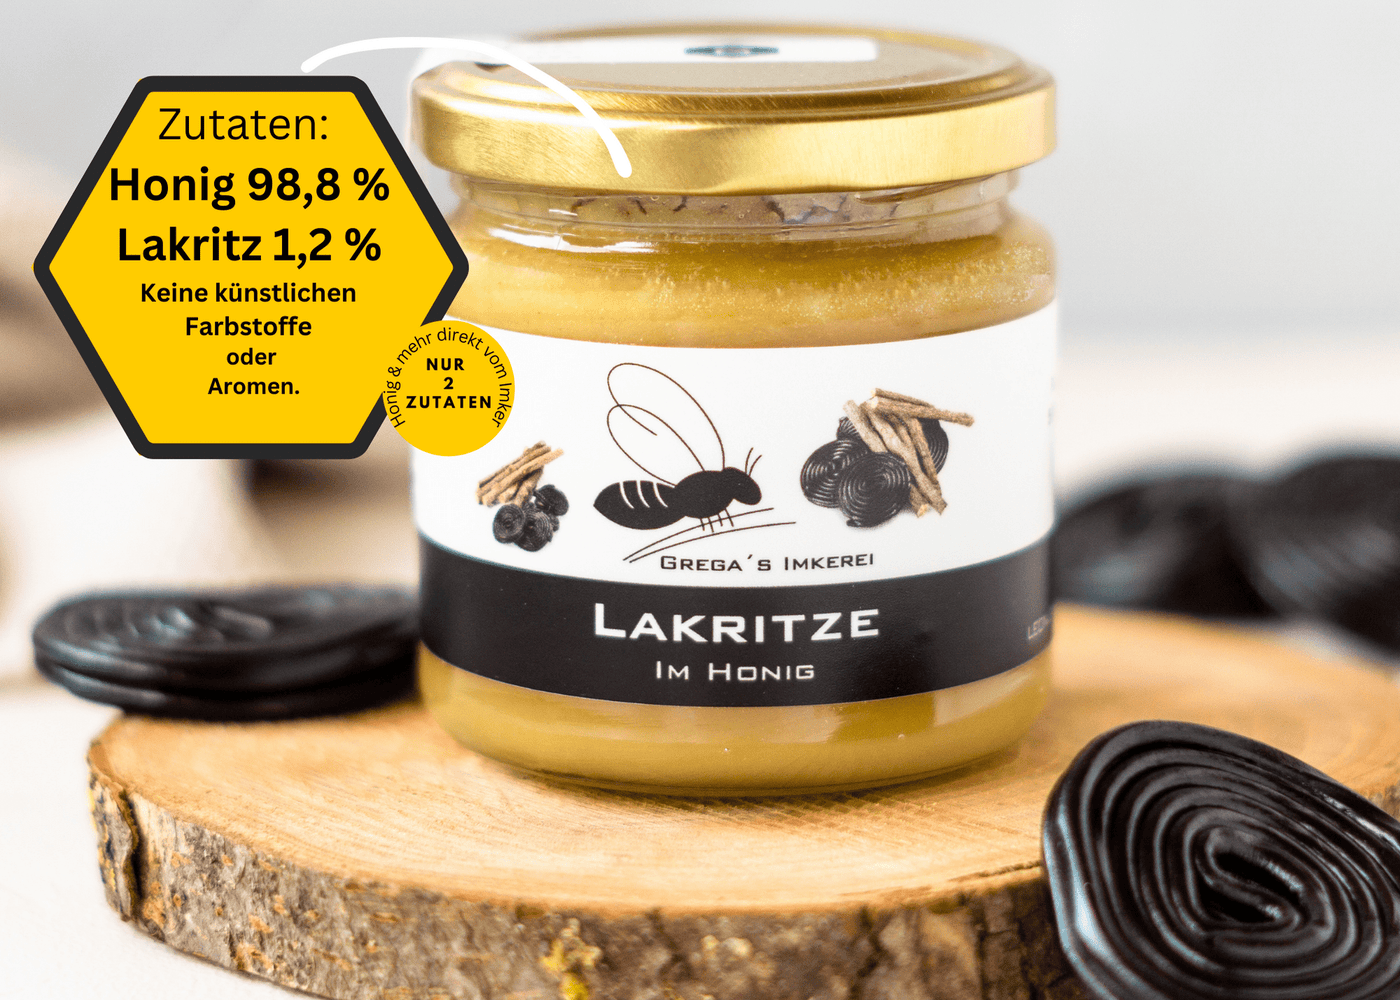 Lakritze im Honig direkt vom Imker Grega´s Imkerei